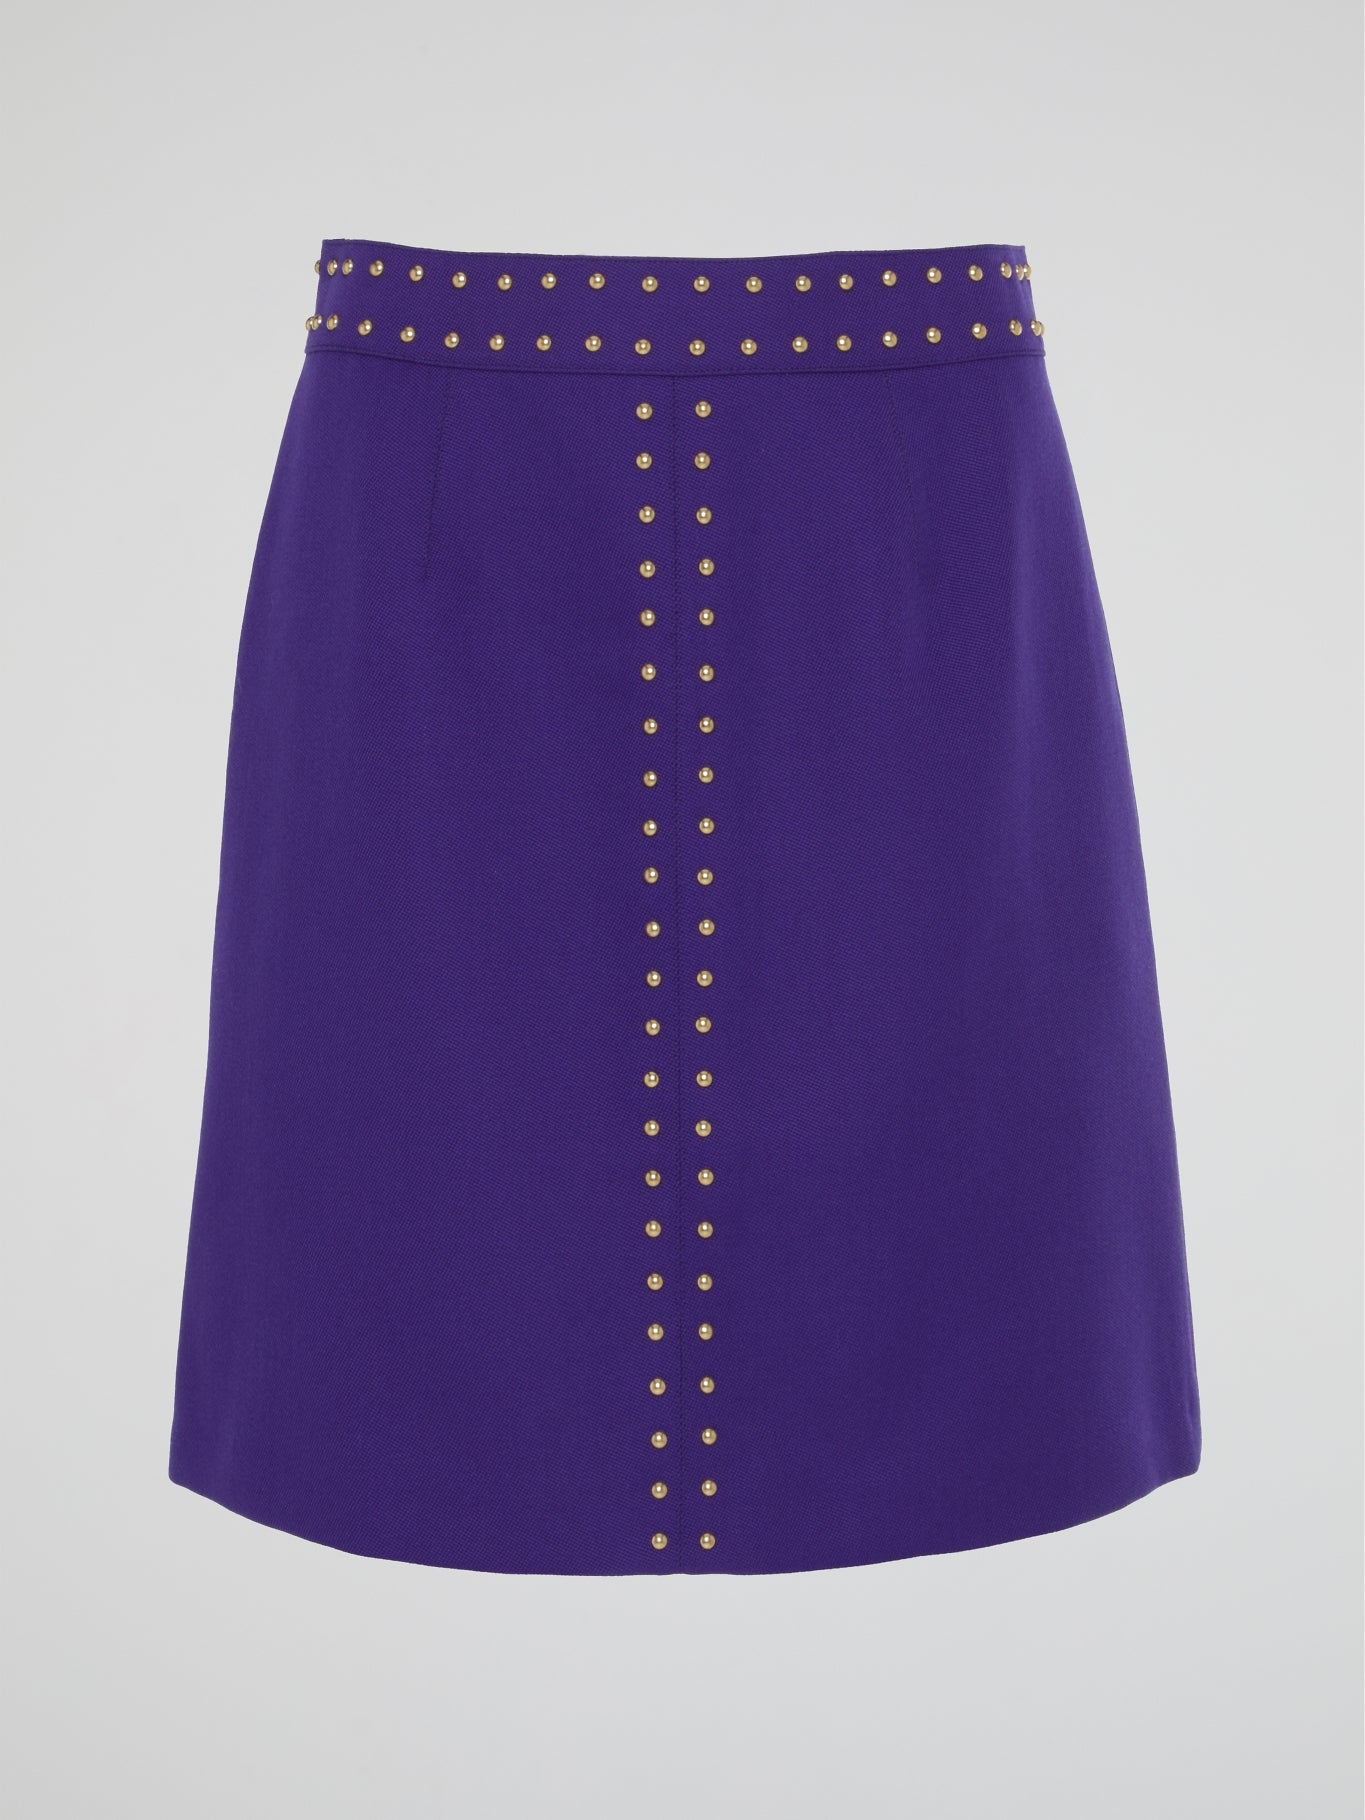 Purple Pencil Cut Skirt